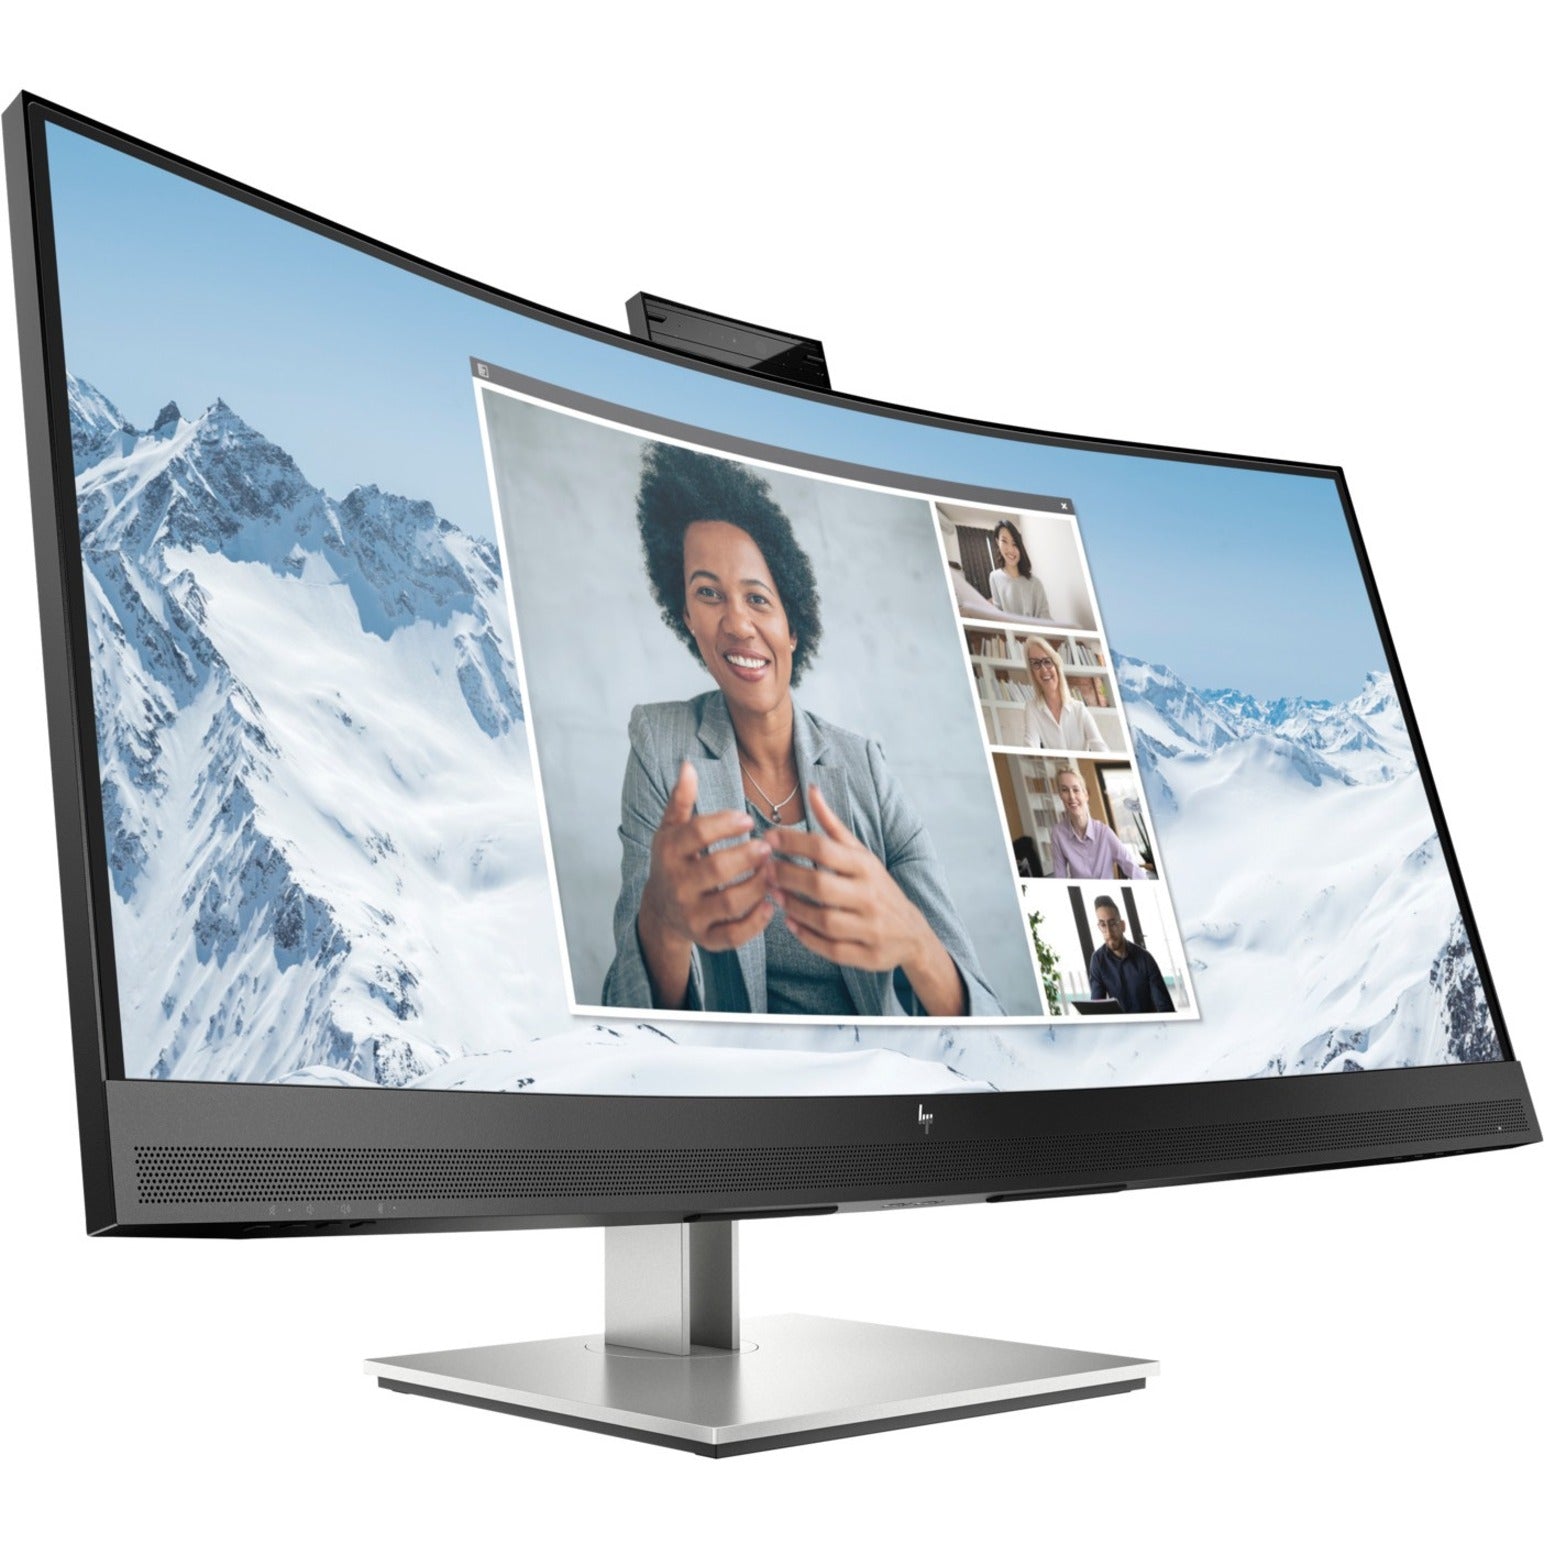 HP E34m G4 WQHD Curved USB-C Conferencing Monitor, 34, 3440 x 1440, Webcam, Microphone, USB Hub